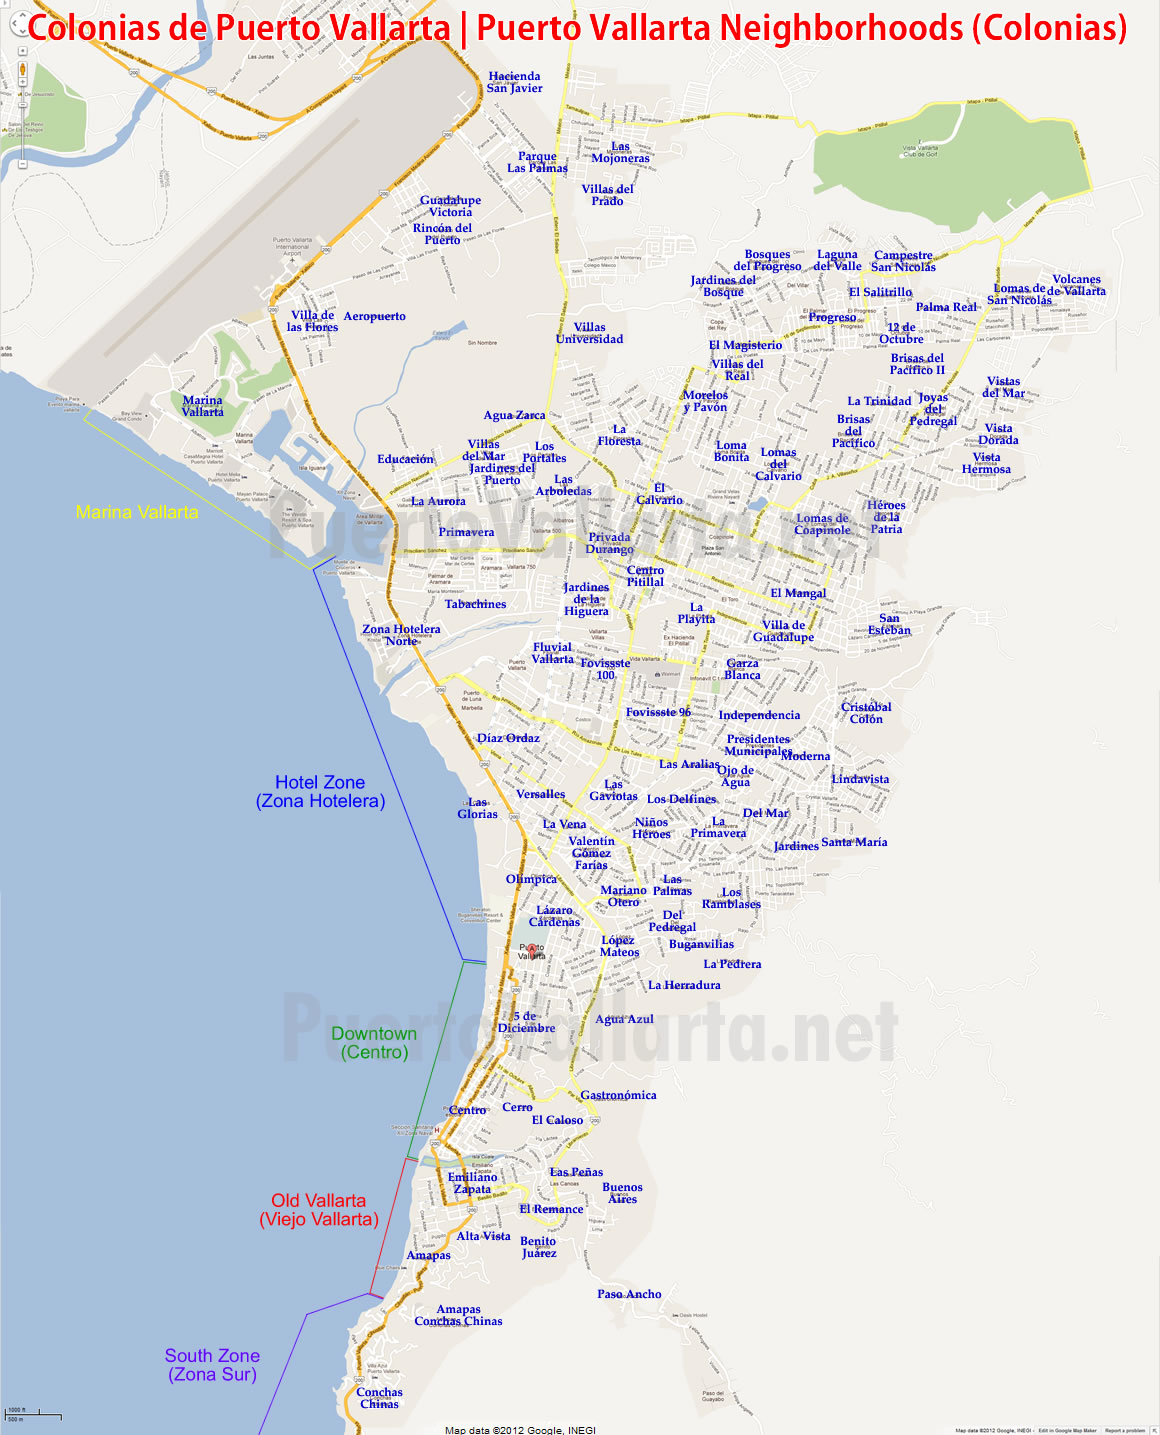 Puerto Vallarta Colonias (Neighborhoods)